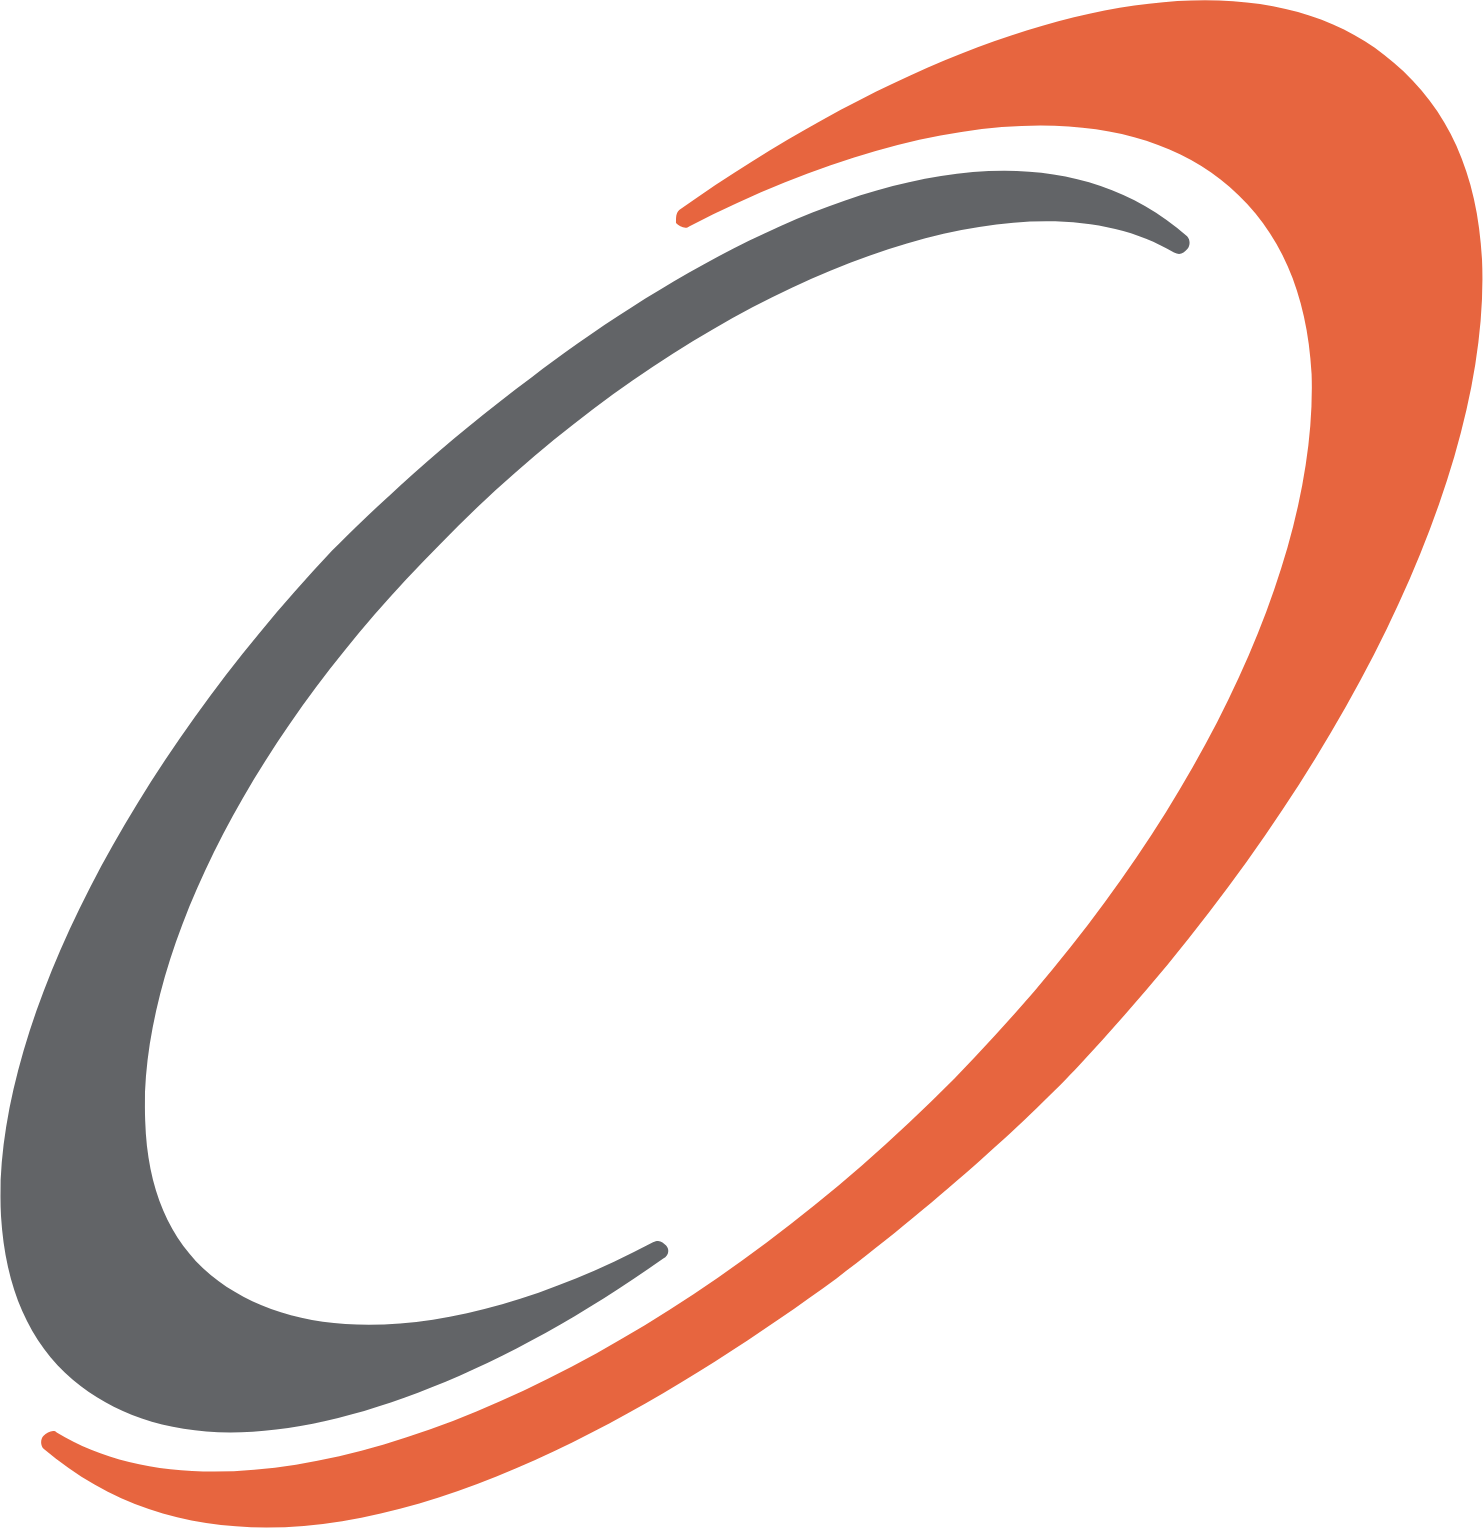 Orchestra BioMed  logo (transparent PNG)